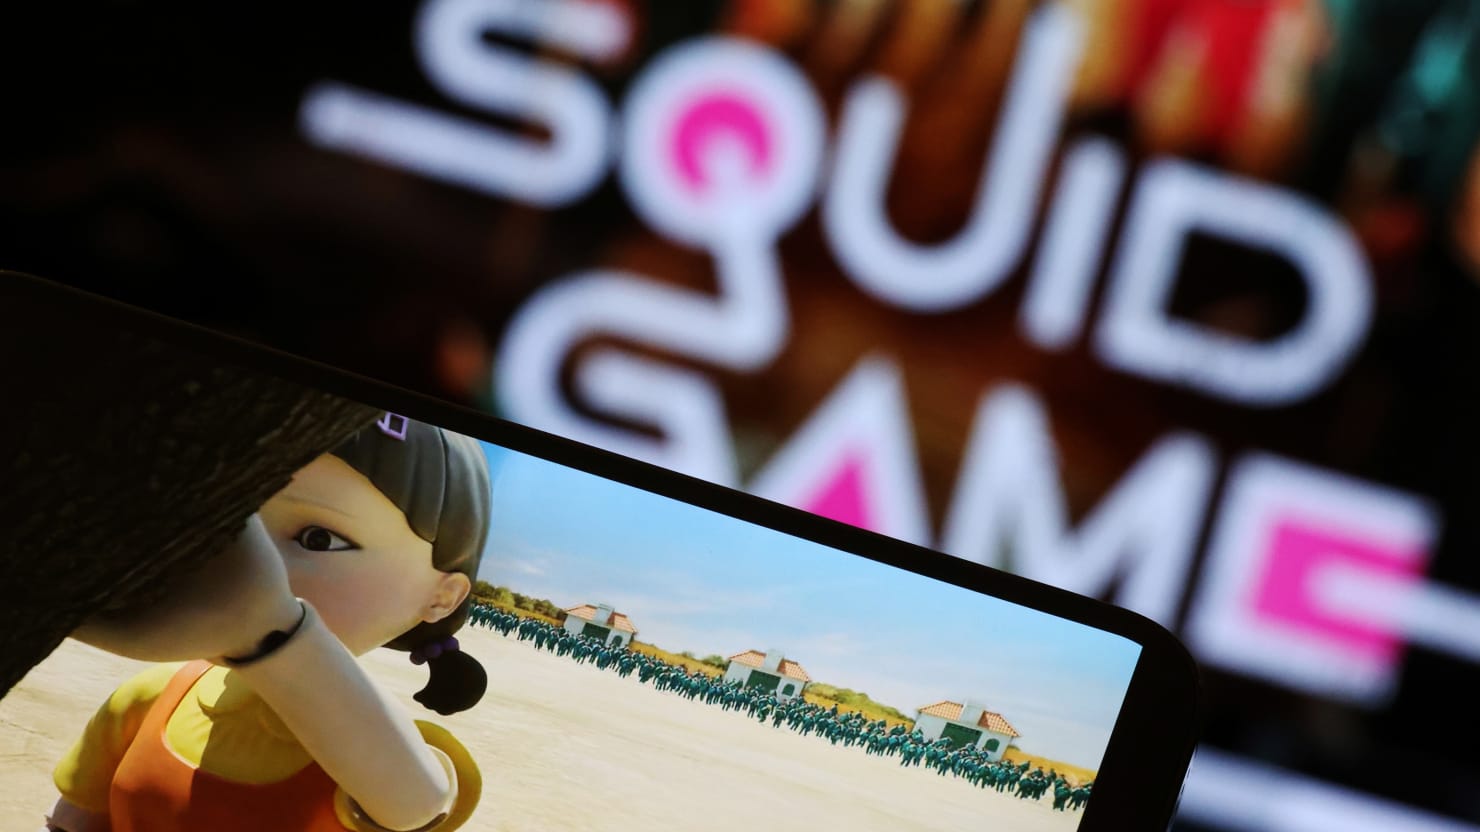 Squid Game: The Challenge' contestants threaten to sue over on-set